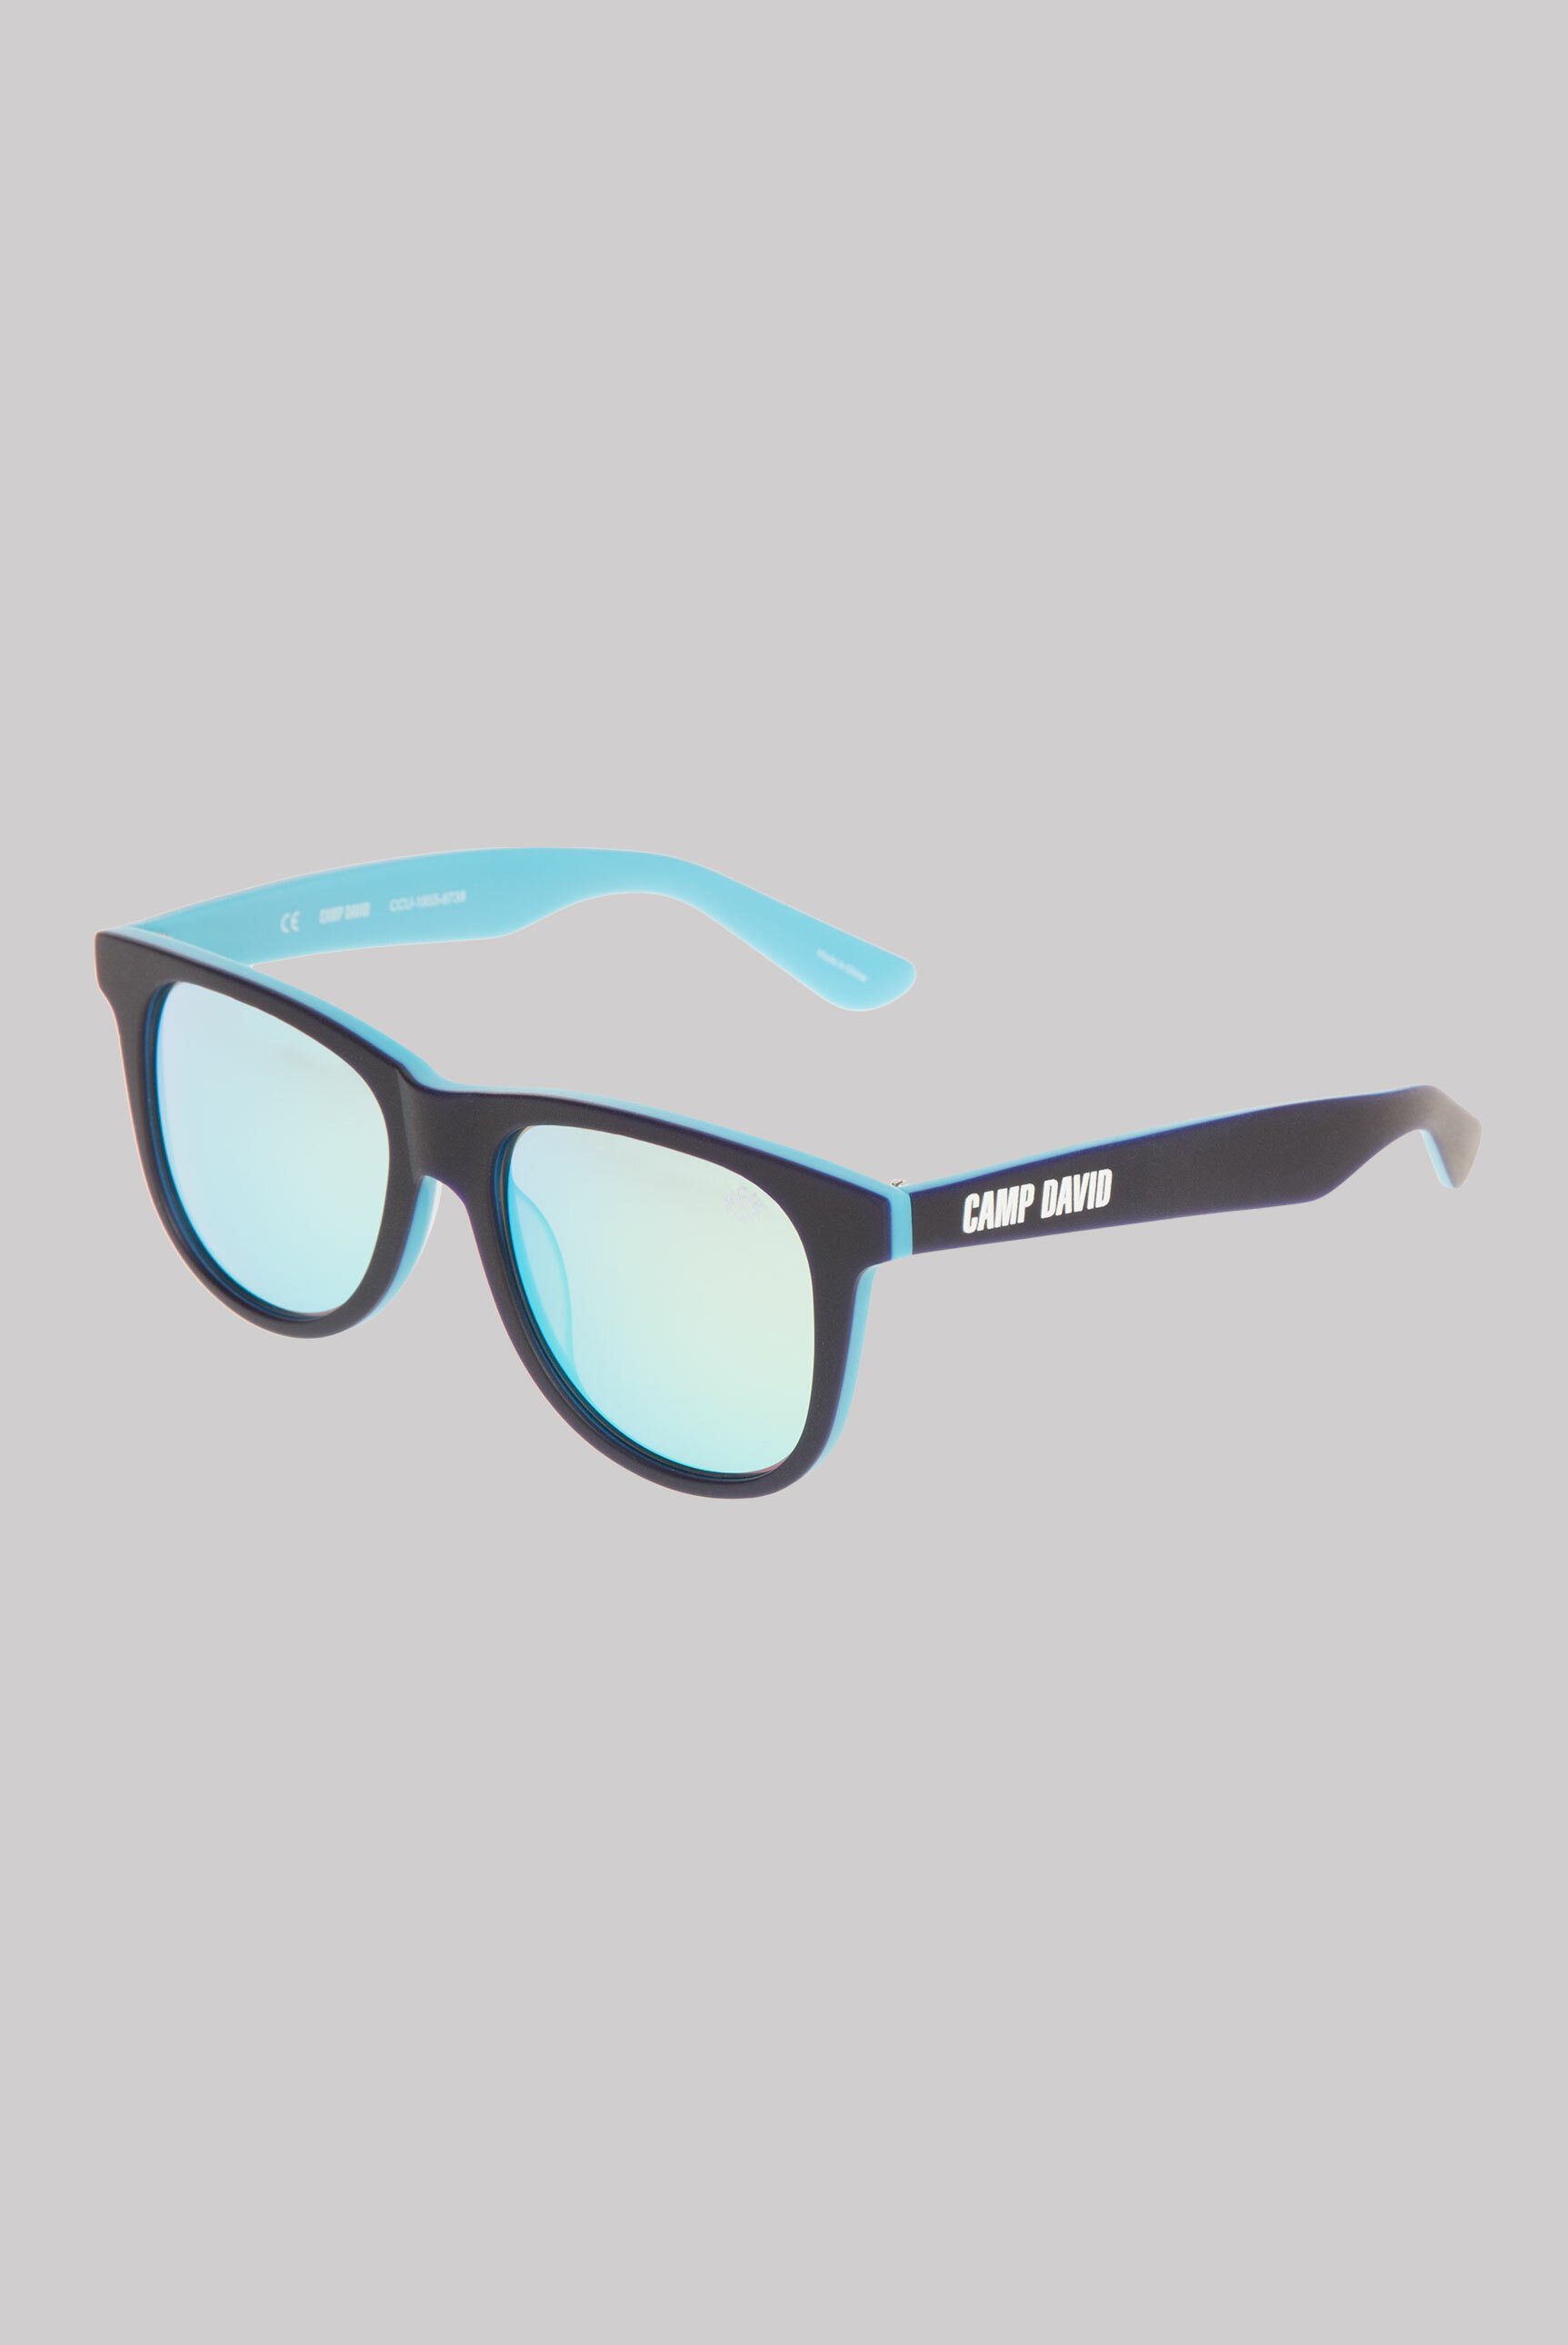 CAMP DAVID Sonnenbrille (ca. 17 x 15 x 15 cm) Print blau | Sonnenbrillen